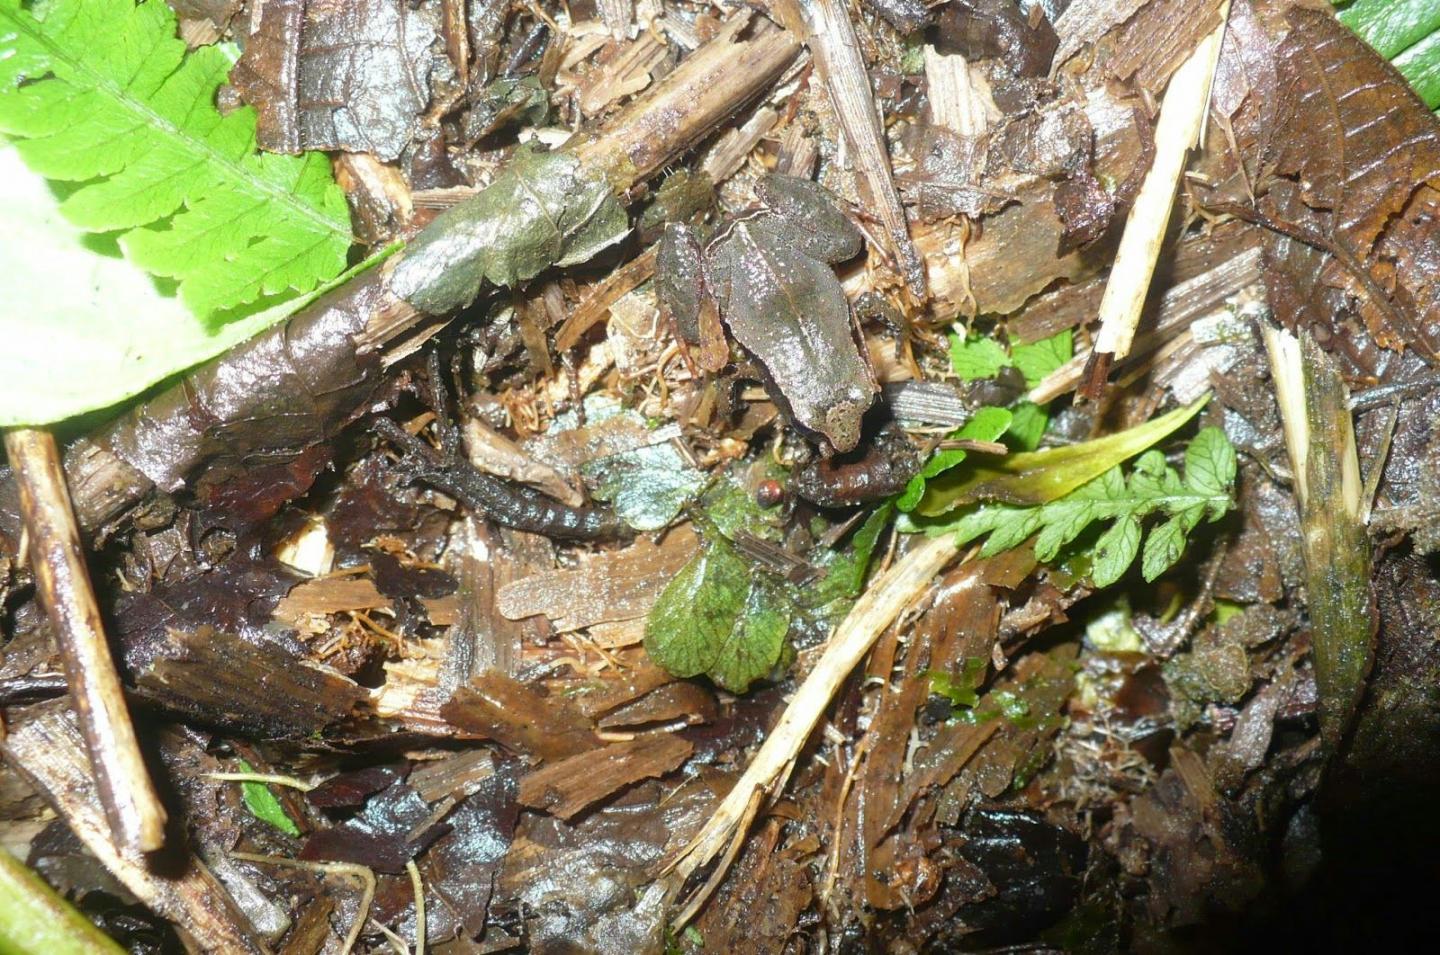 Freshbelly Frog in Its Natural Habitat